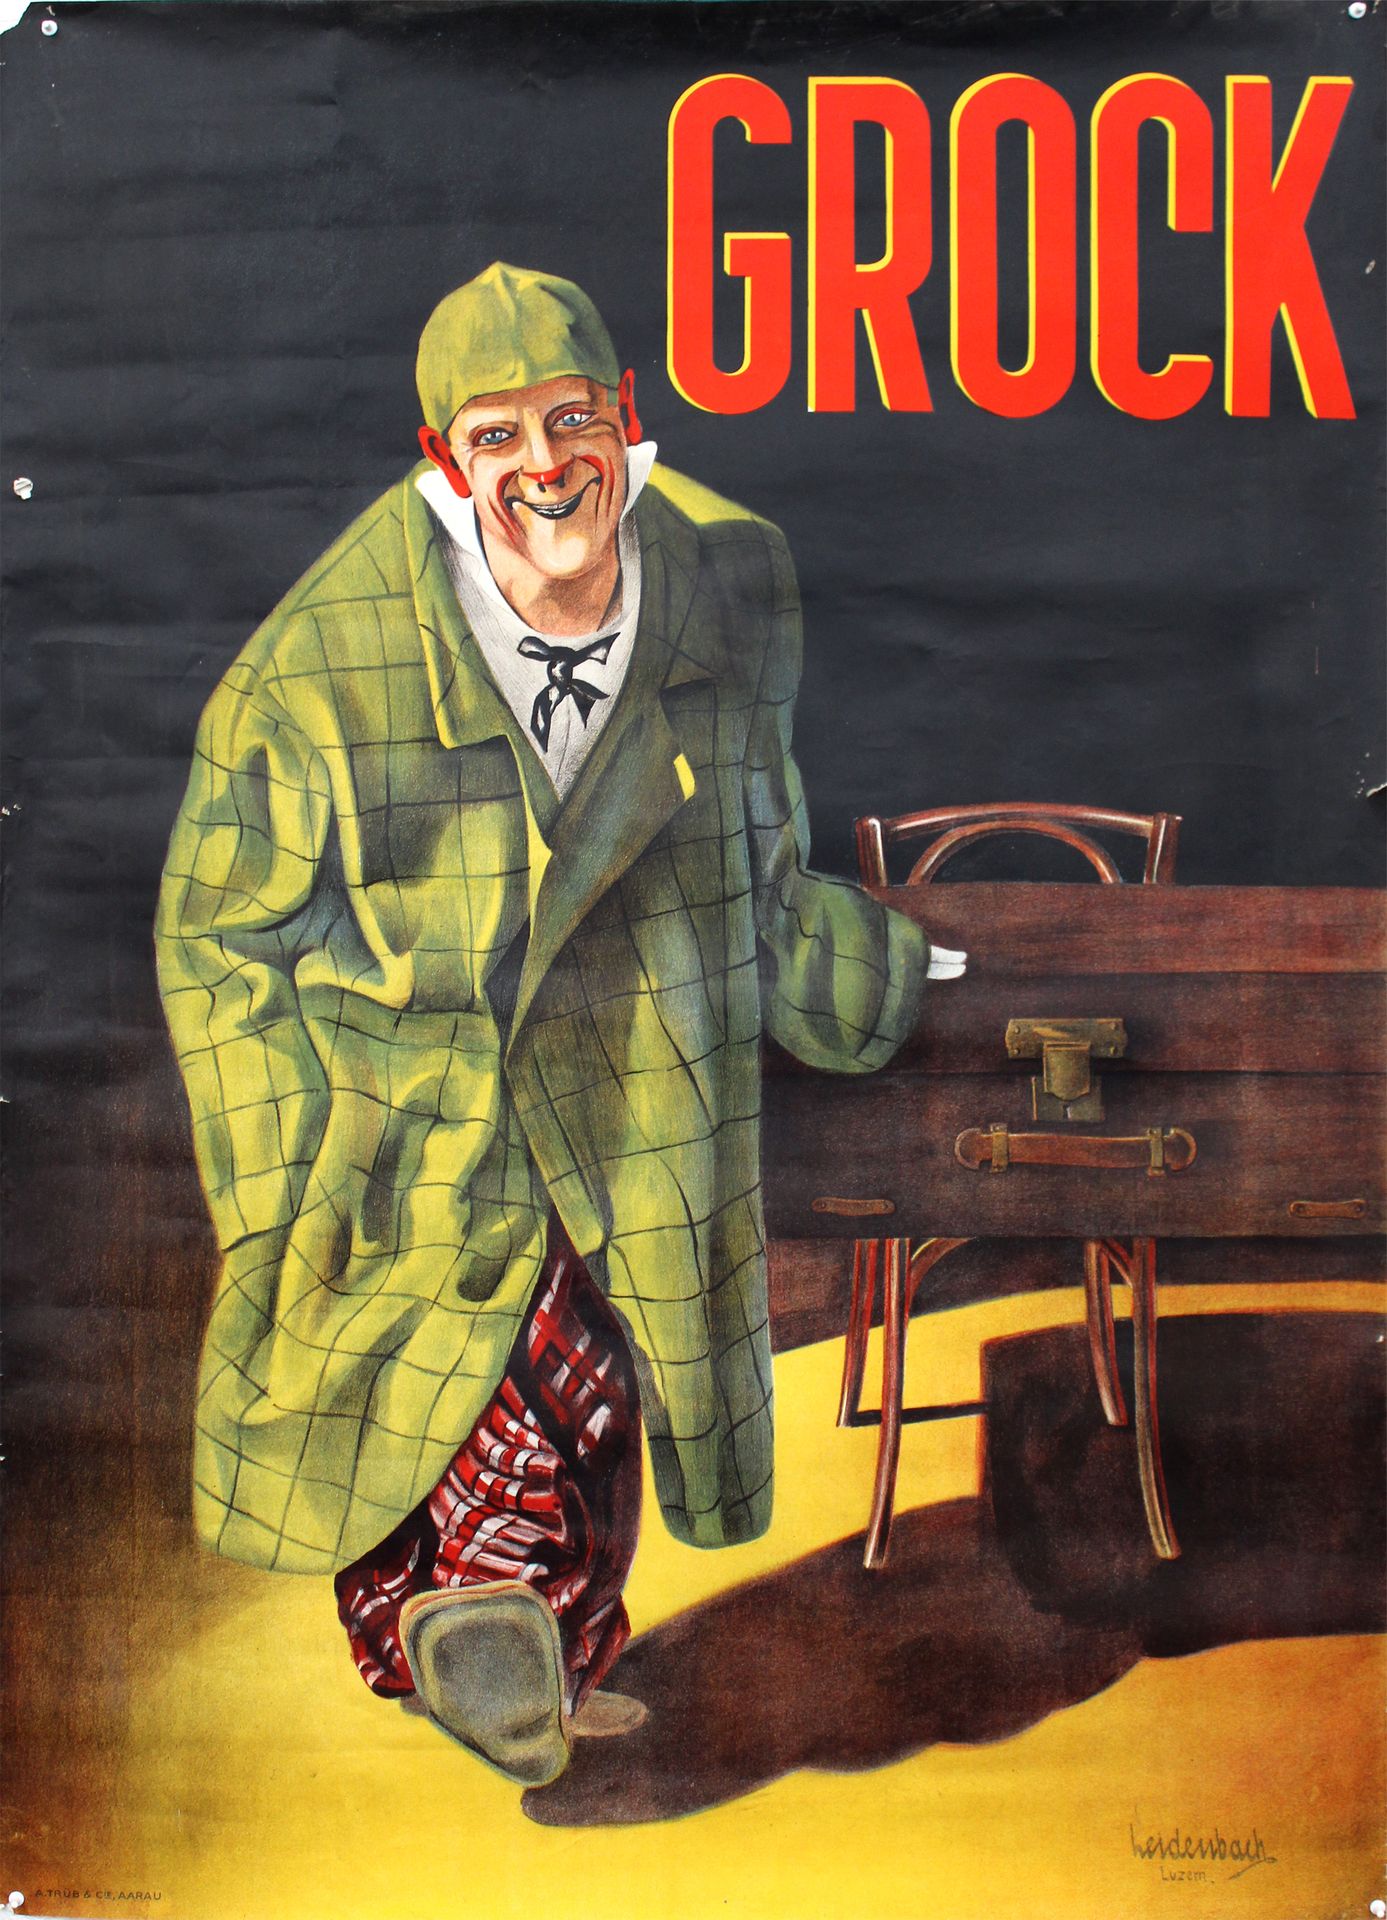 Null 石墨画海报，约1950年
路德维希-莱登巴赫（Ludwig LEIDENBACH）制作的著名小丑GROCK的稀有海报，表现了小丑的全部数量。
石印版画&hellip;